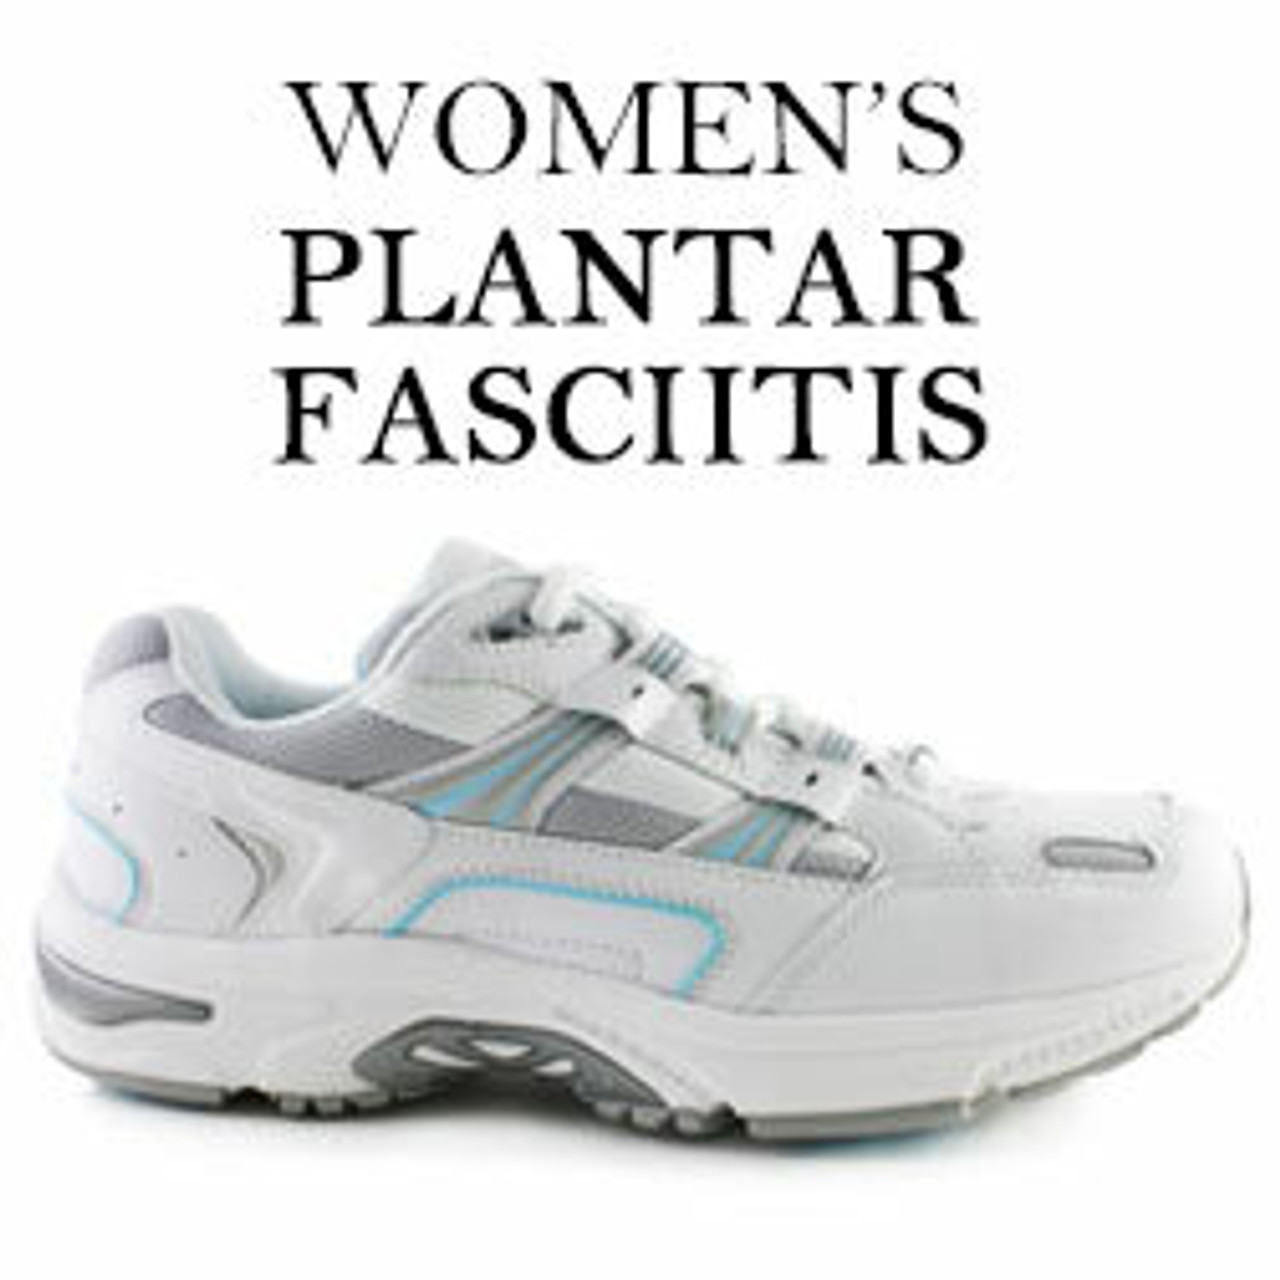 Plantar Fasciitis Shoes For Women